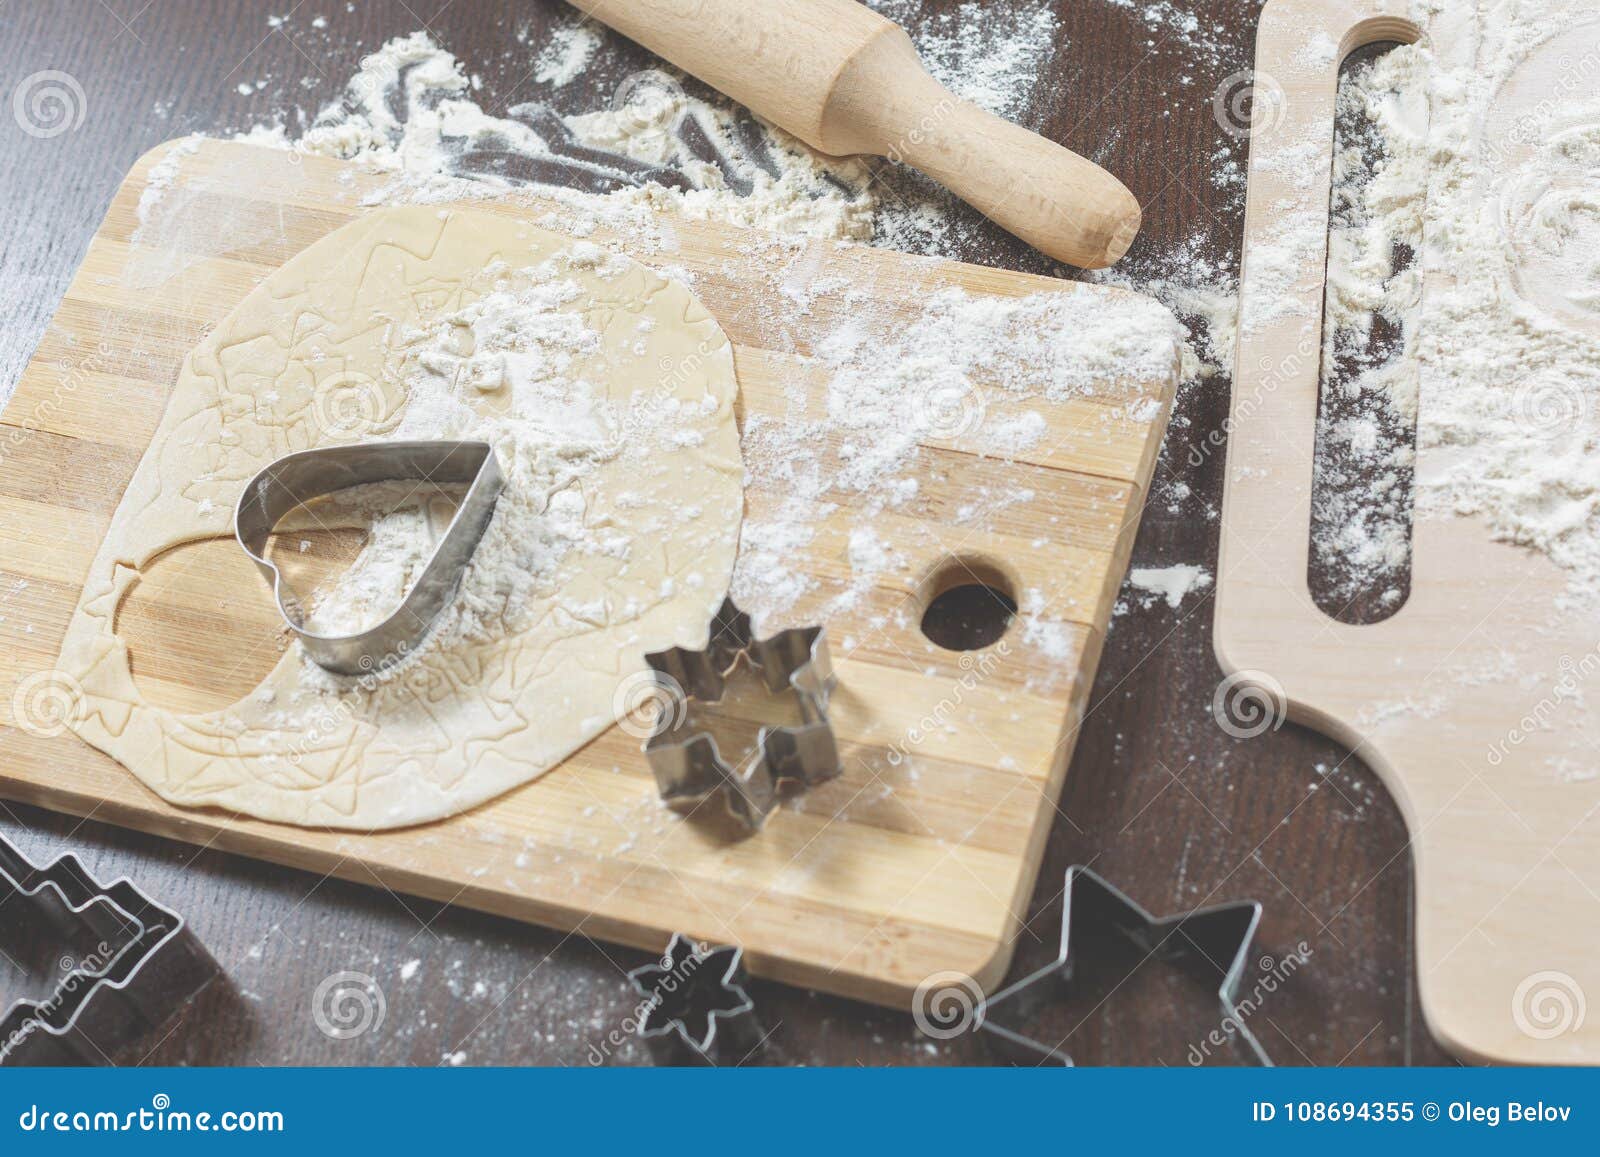 process-making-homemade-cookies-wooden-board-flour-dough-cookie-cutters-shape-heart-star-lie-table-o-108694355.jpg